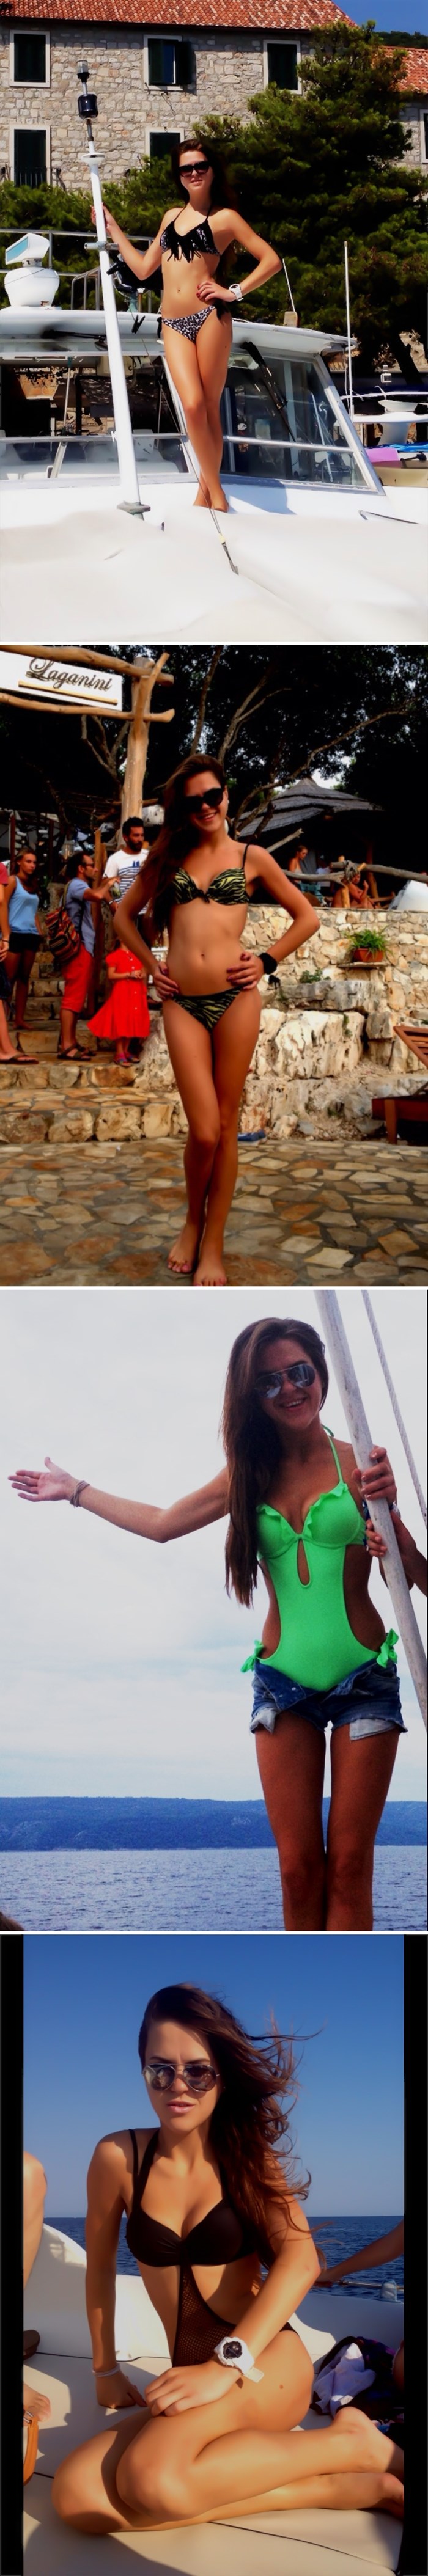 Index Miss bikini 2013: Marijana Katavić